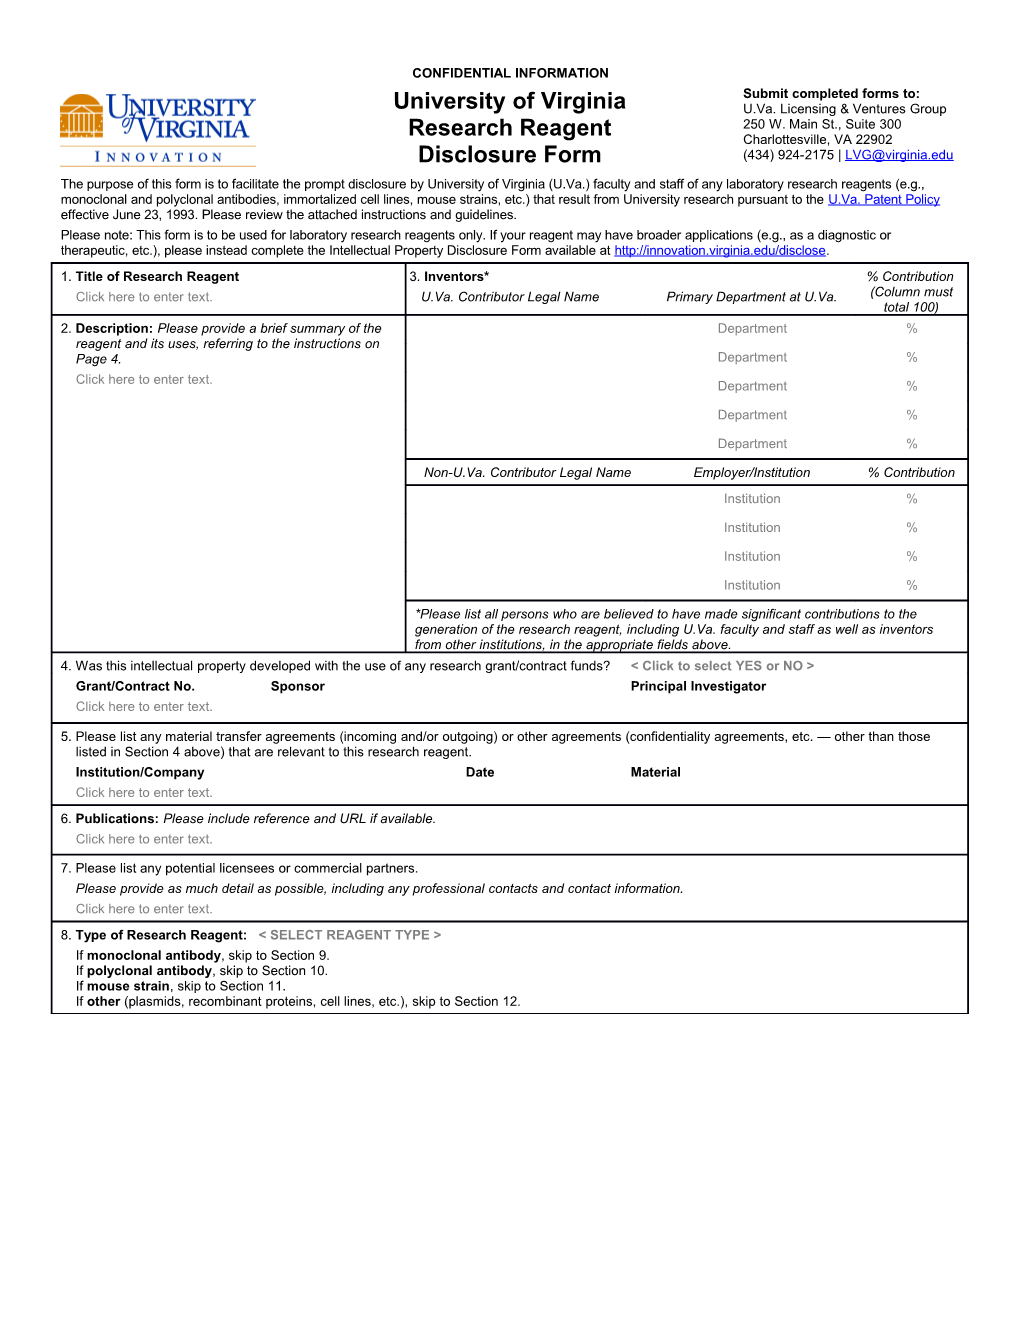 UVA Research Reagent Disclosure Form (01108609)